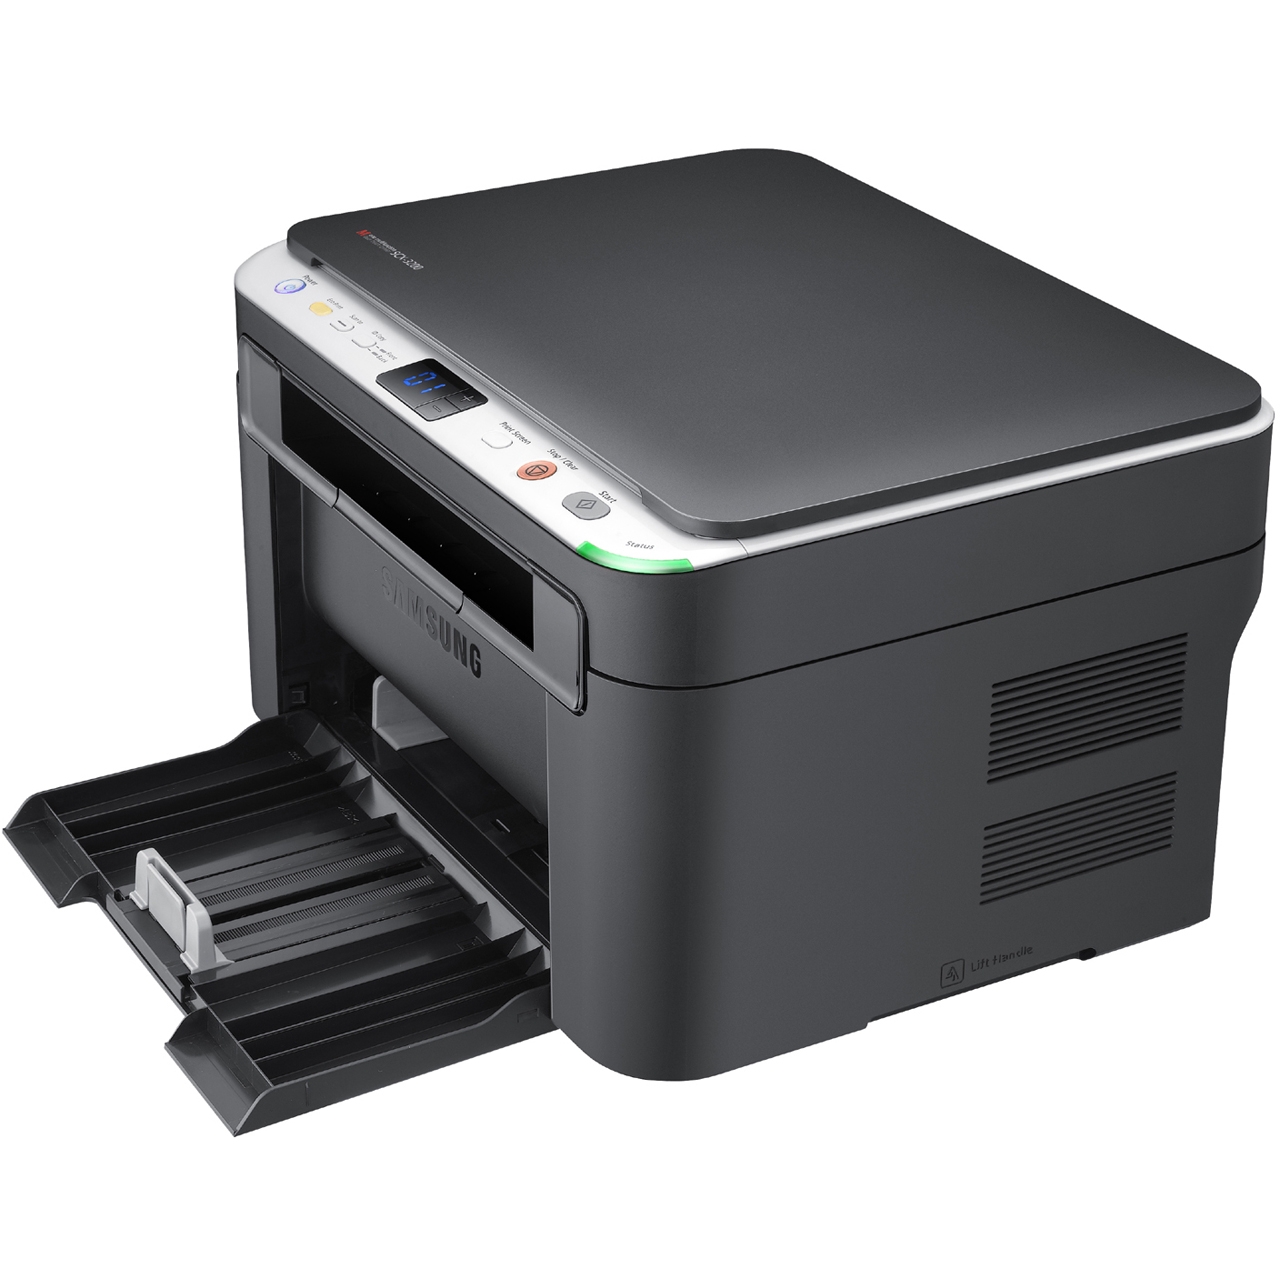 Принтер купить ситилинк. Принтер Samsung SCX-3200. МФУ Samsung 3200. МФУ самсунг SCX 3200. Mono Laser Printer SCX-3200.